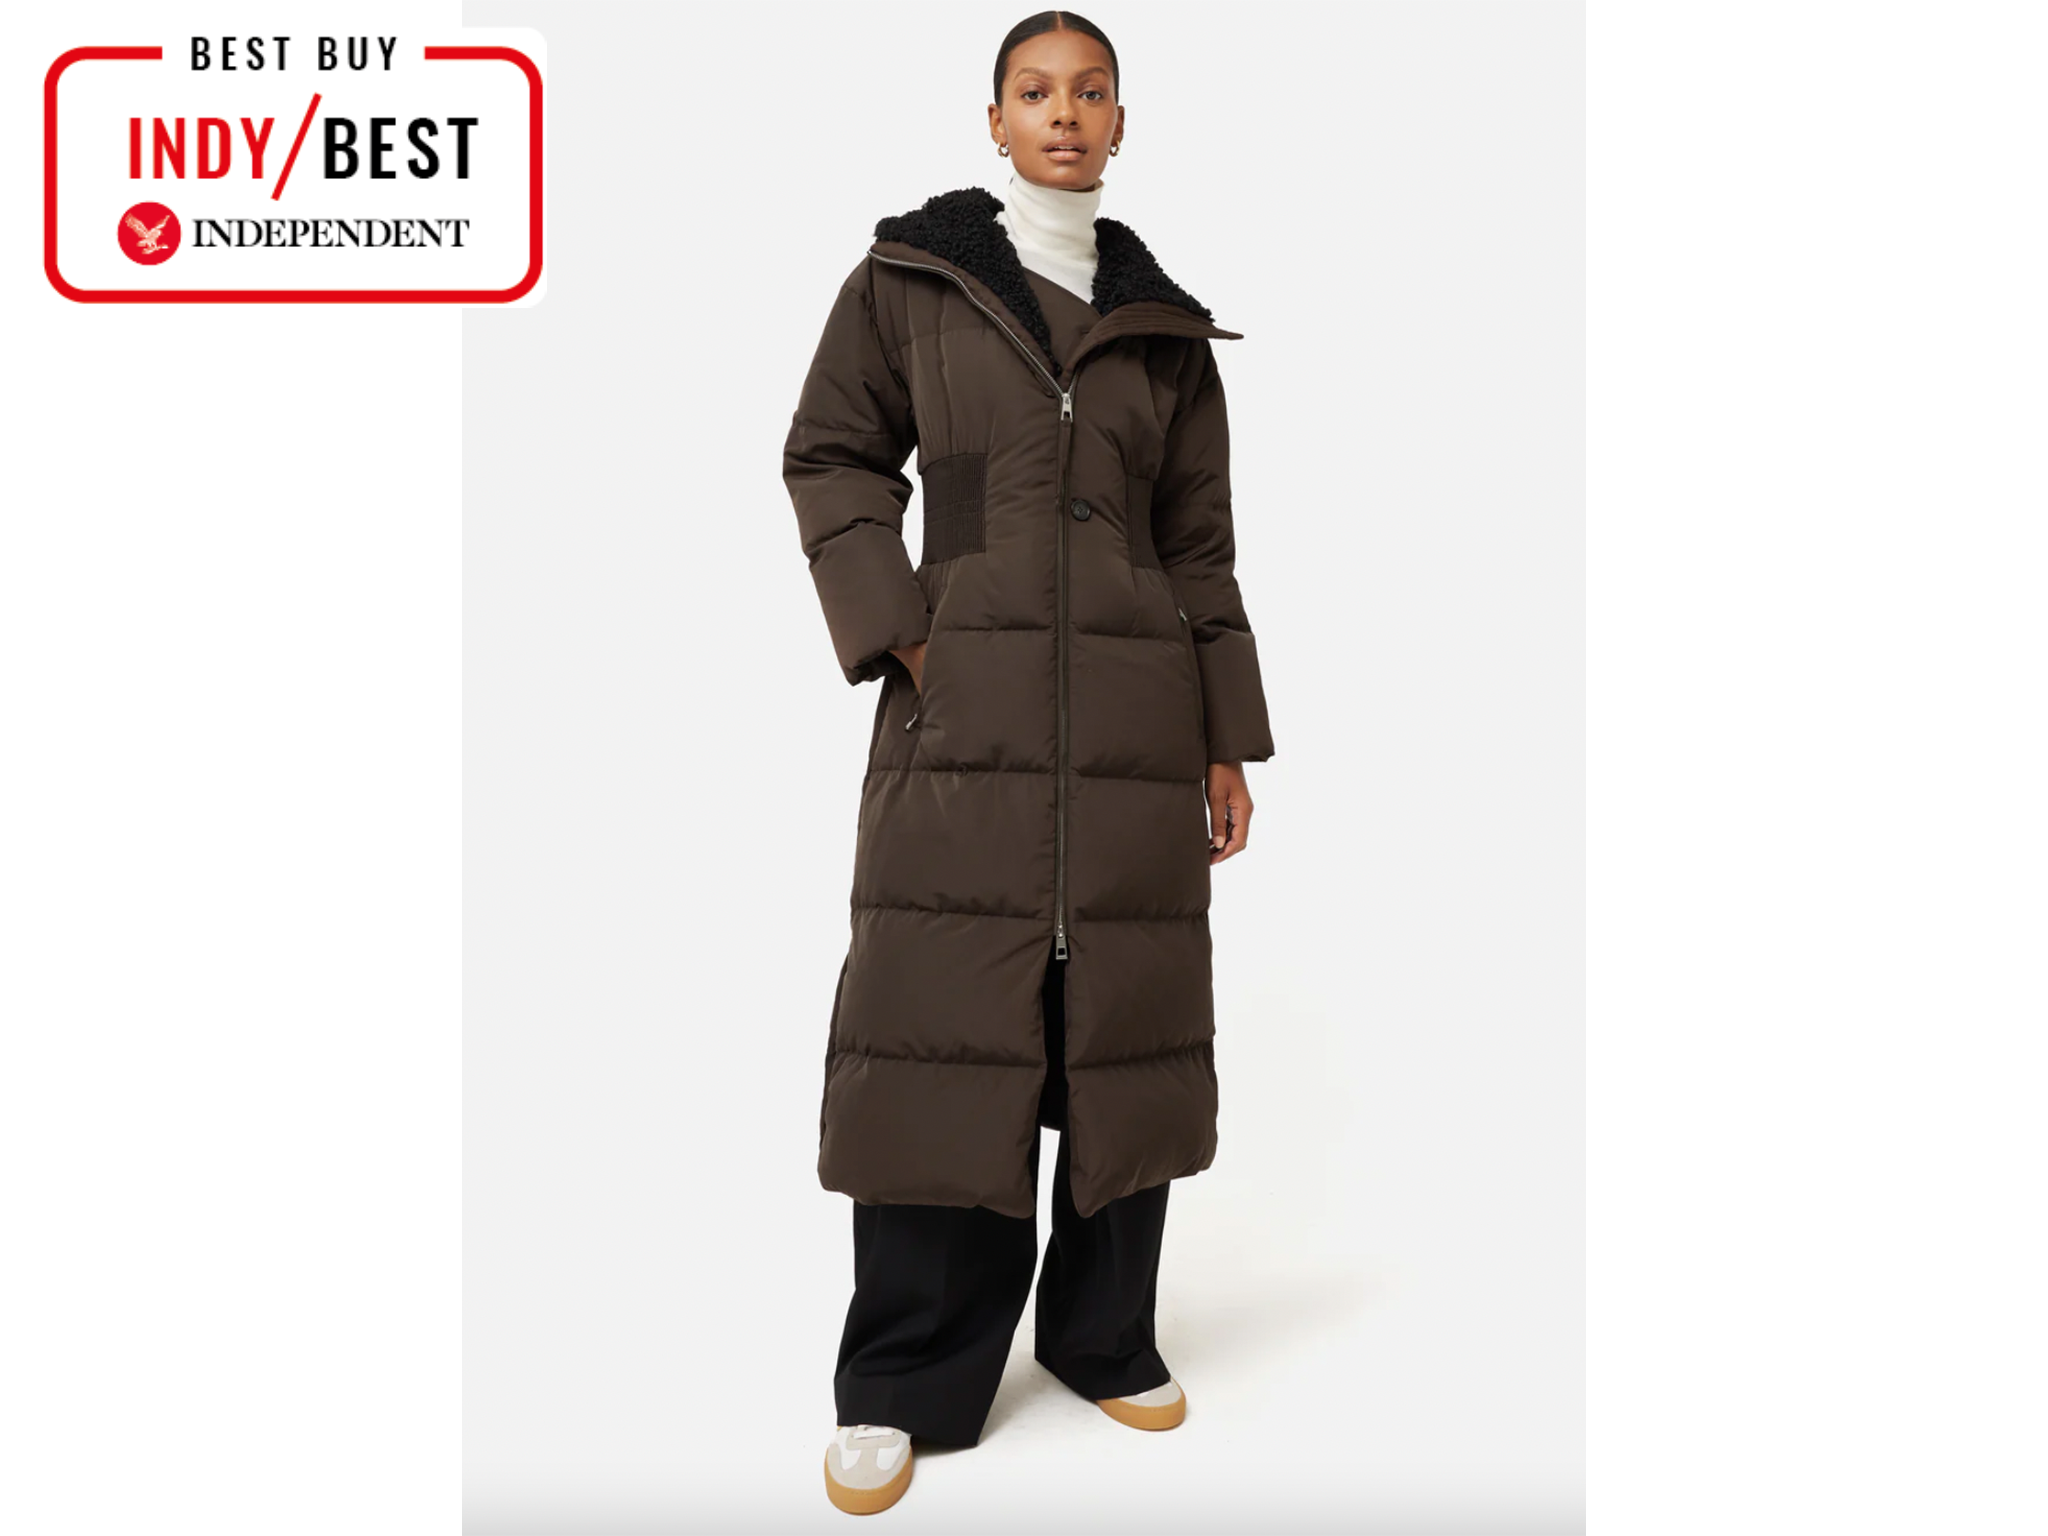 Women's Winter Full Length Hooded Down Jacket Puffer Warm Maxi Parka Size  s-xl